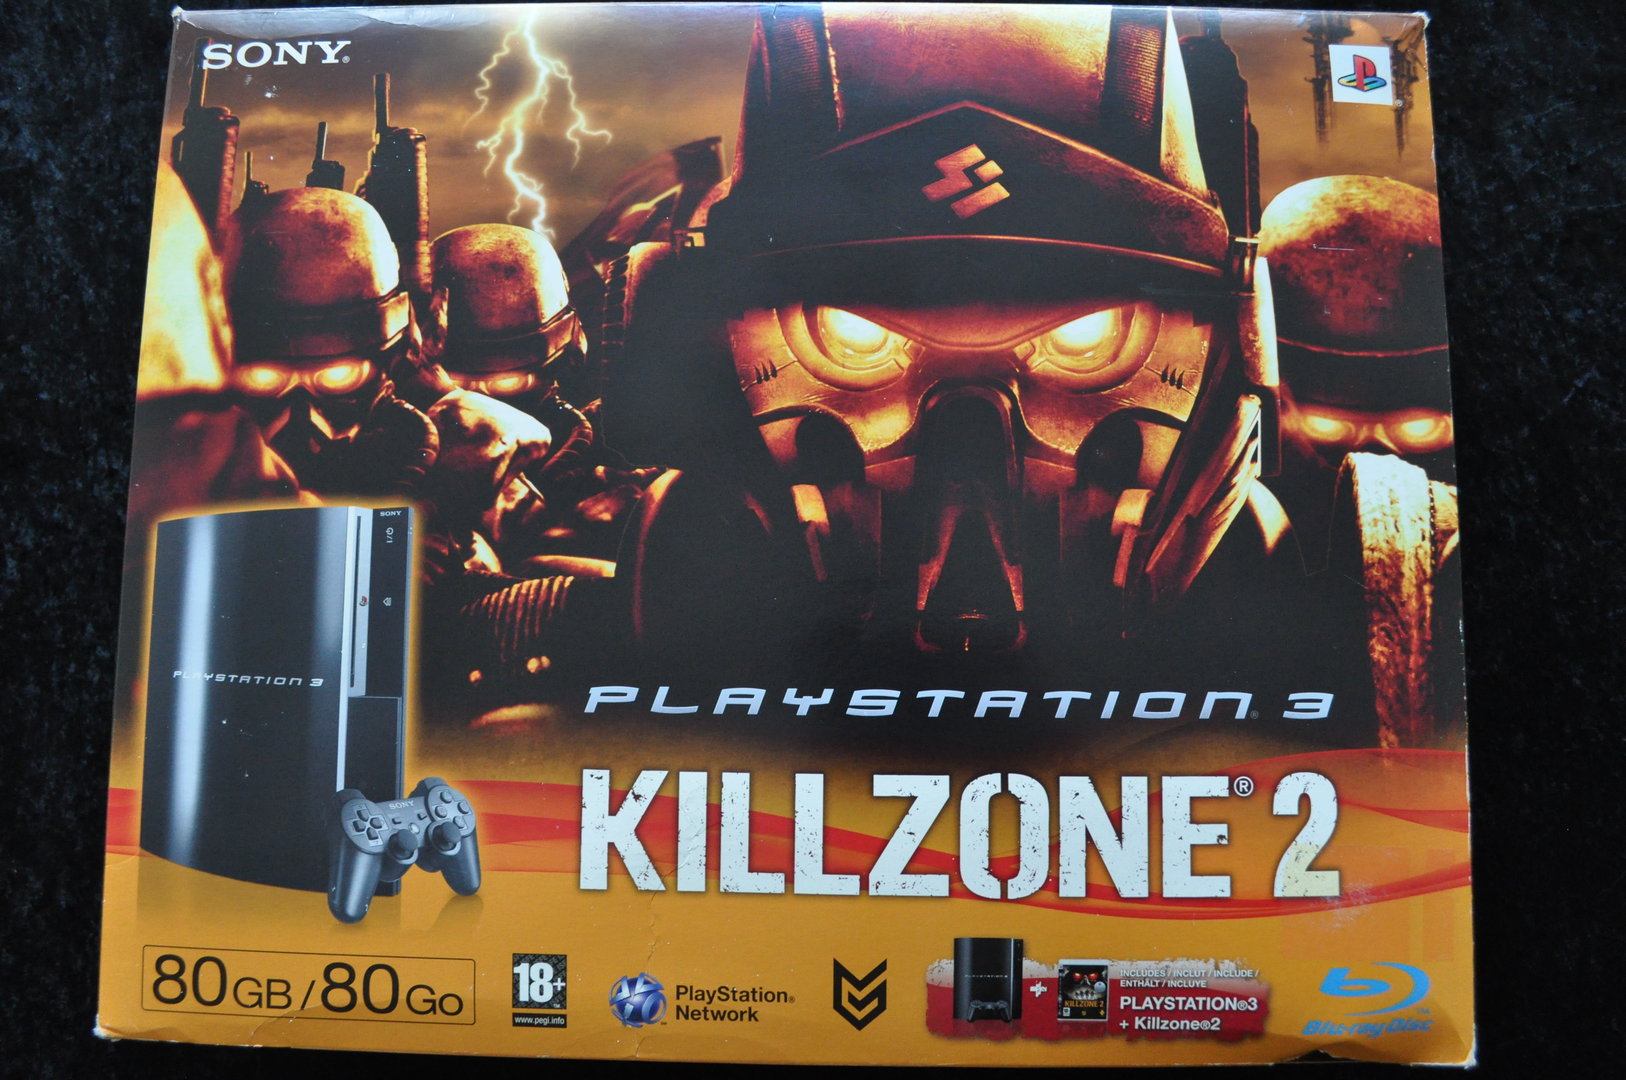 Killzone 2 PlayStation 3 PS3 80GB Edition Boxed - Retrogameking.com |  Retro,Games,Consoles,Collectables